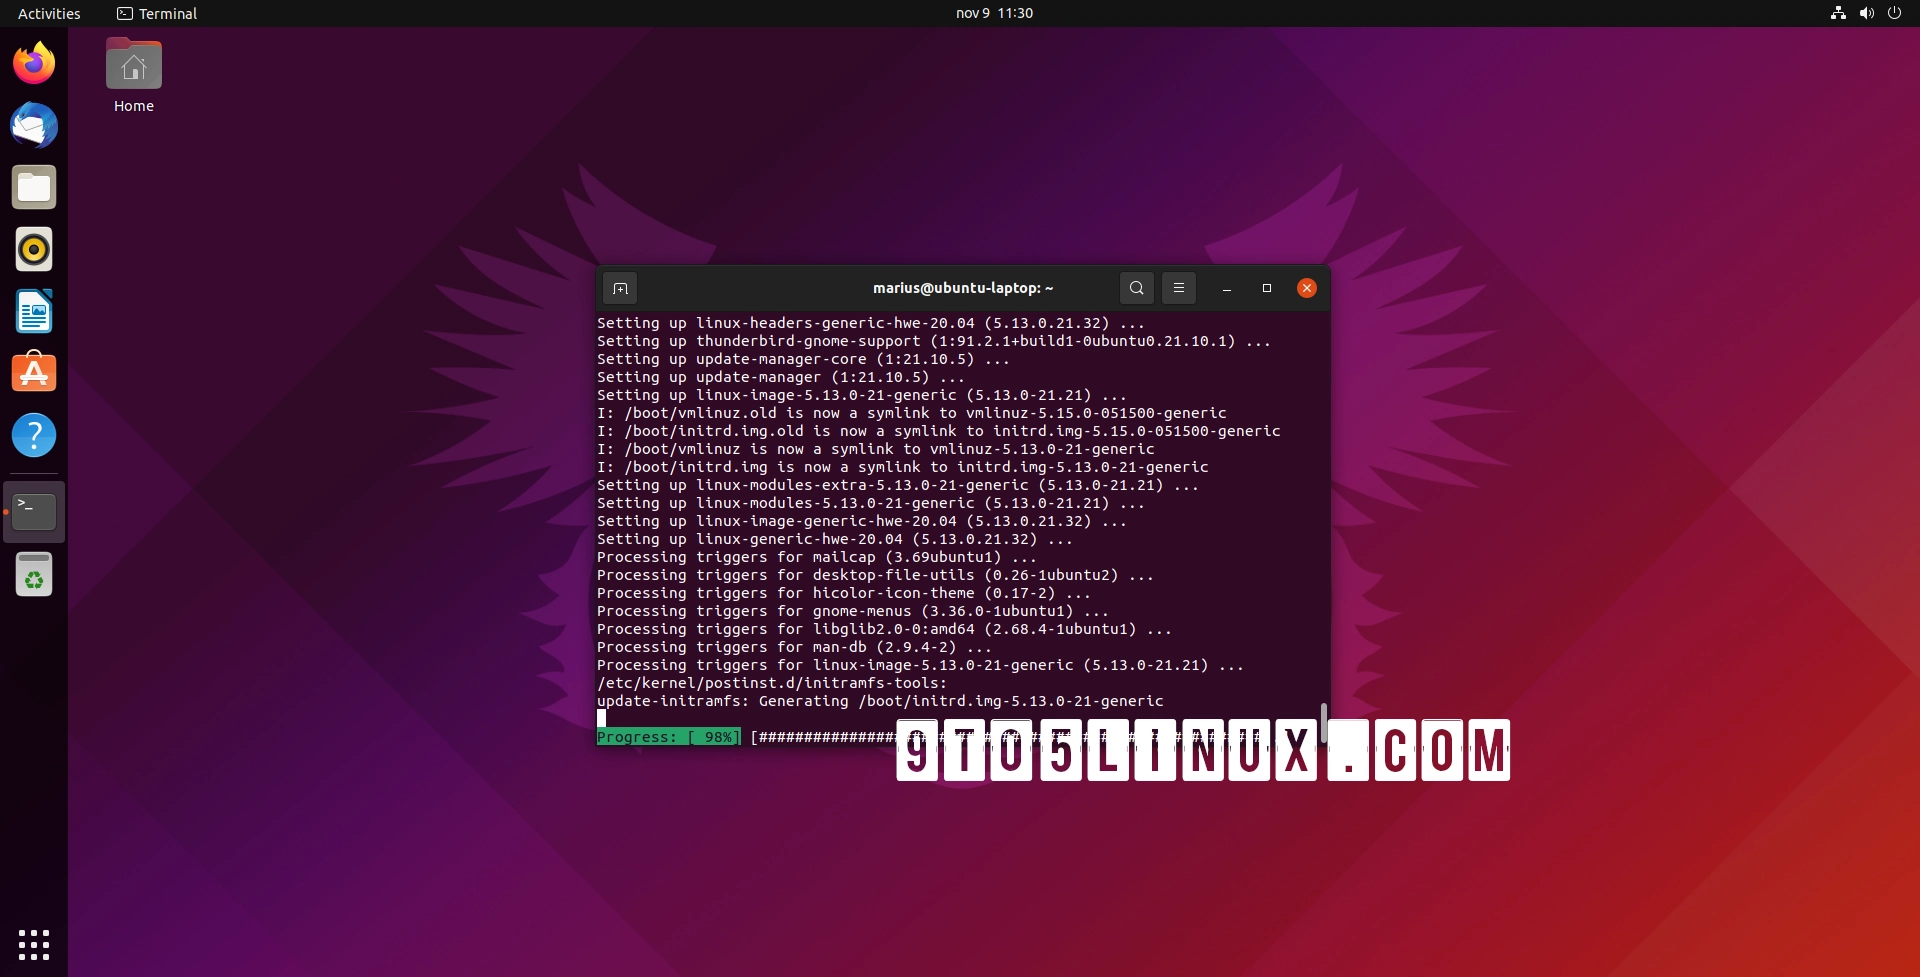 Canonical Releases New Ubuntu Linux Kernel Security Updates to Fix 13 Vulnerabilities